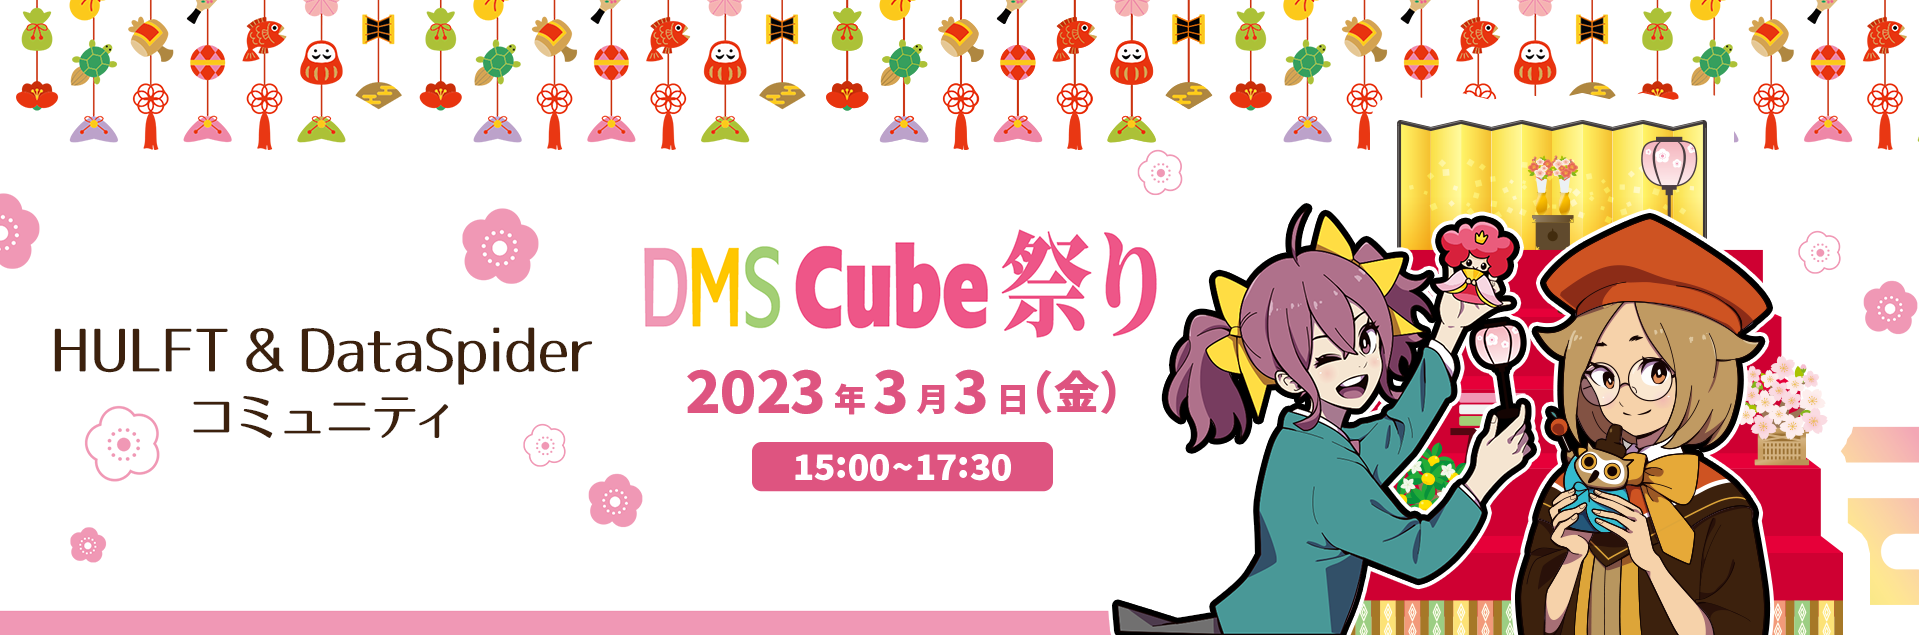 DMS Cube 祭り 2023